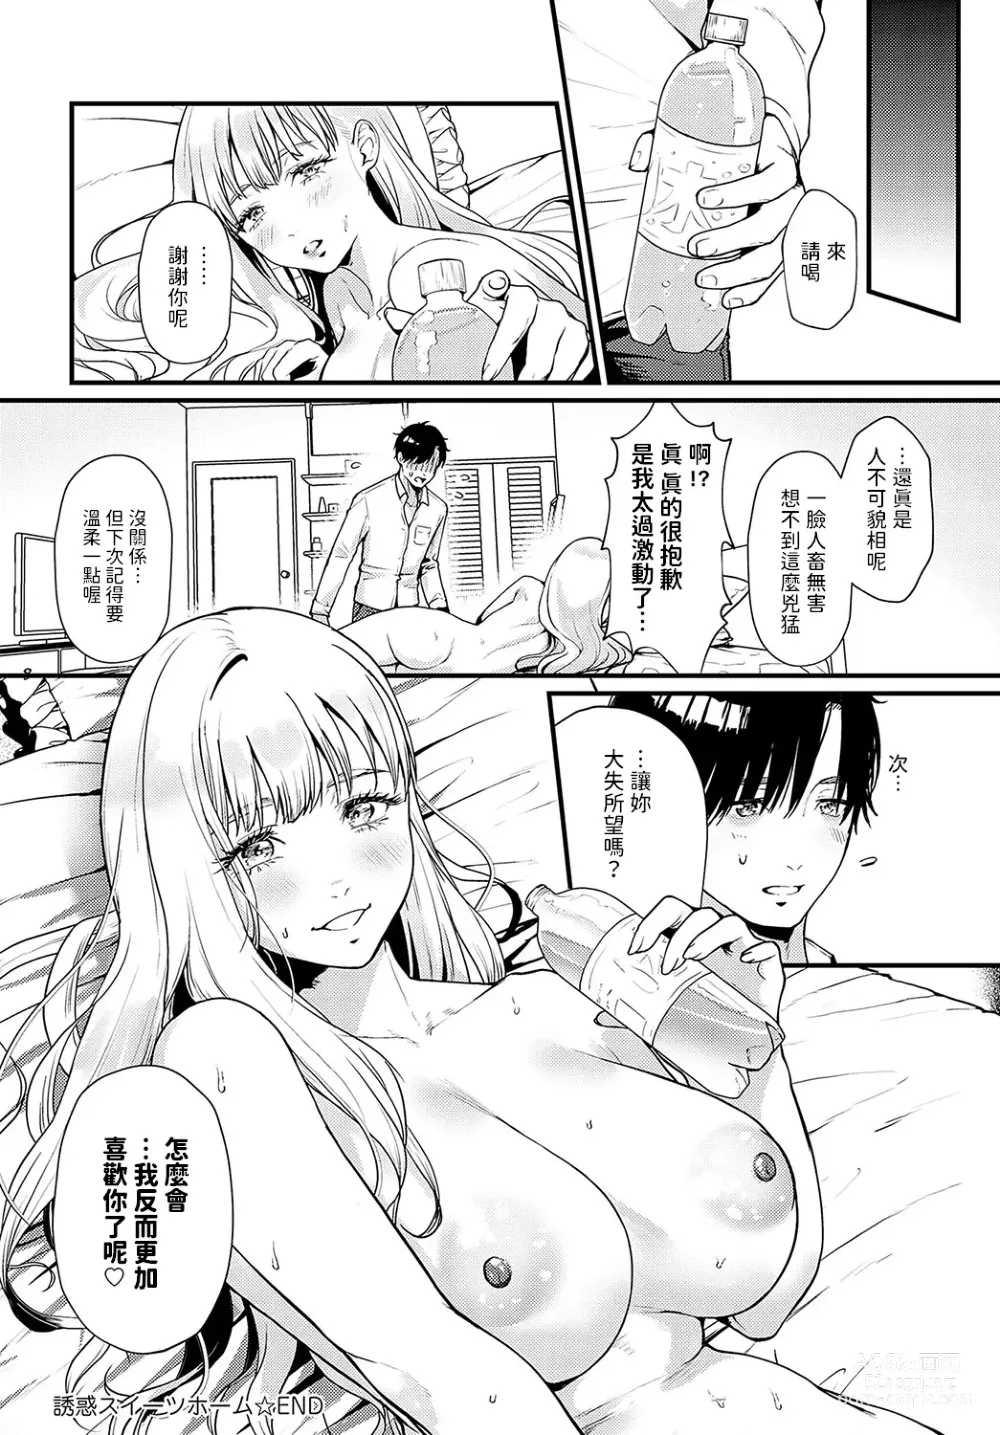 Page 24 of manga Yuuwaku Sweets Home